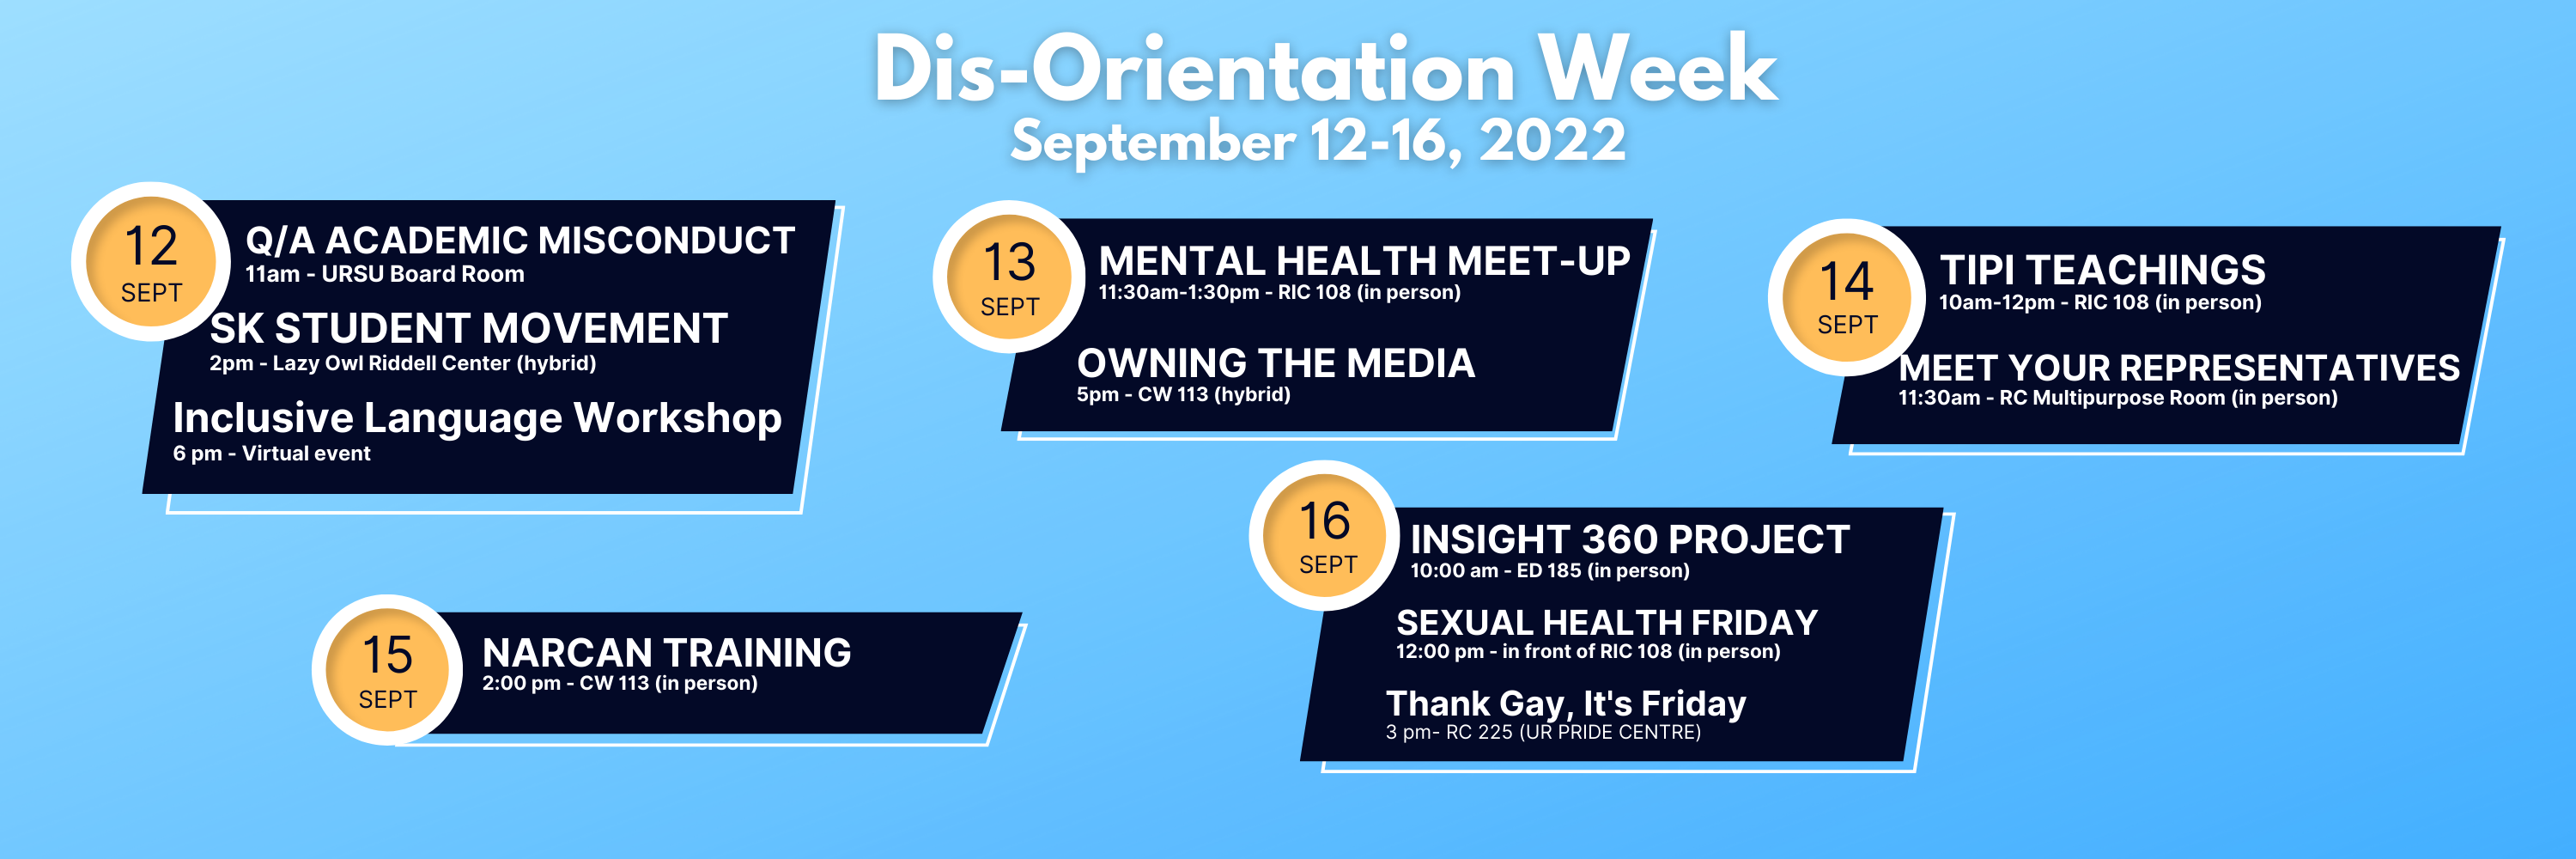 Dis-Orientation Week web banner (1)